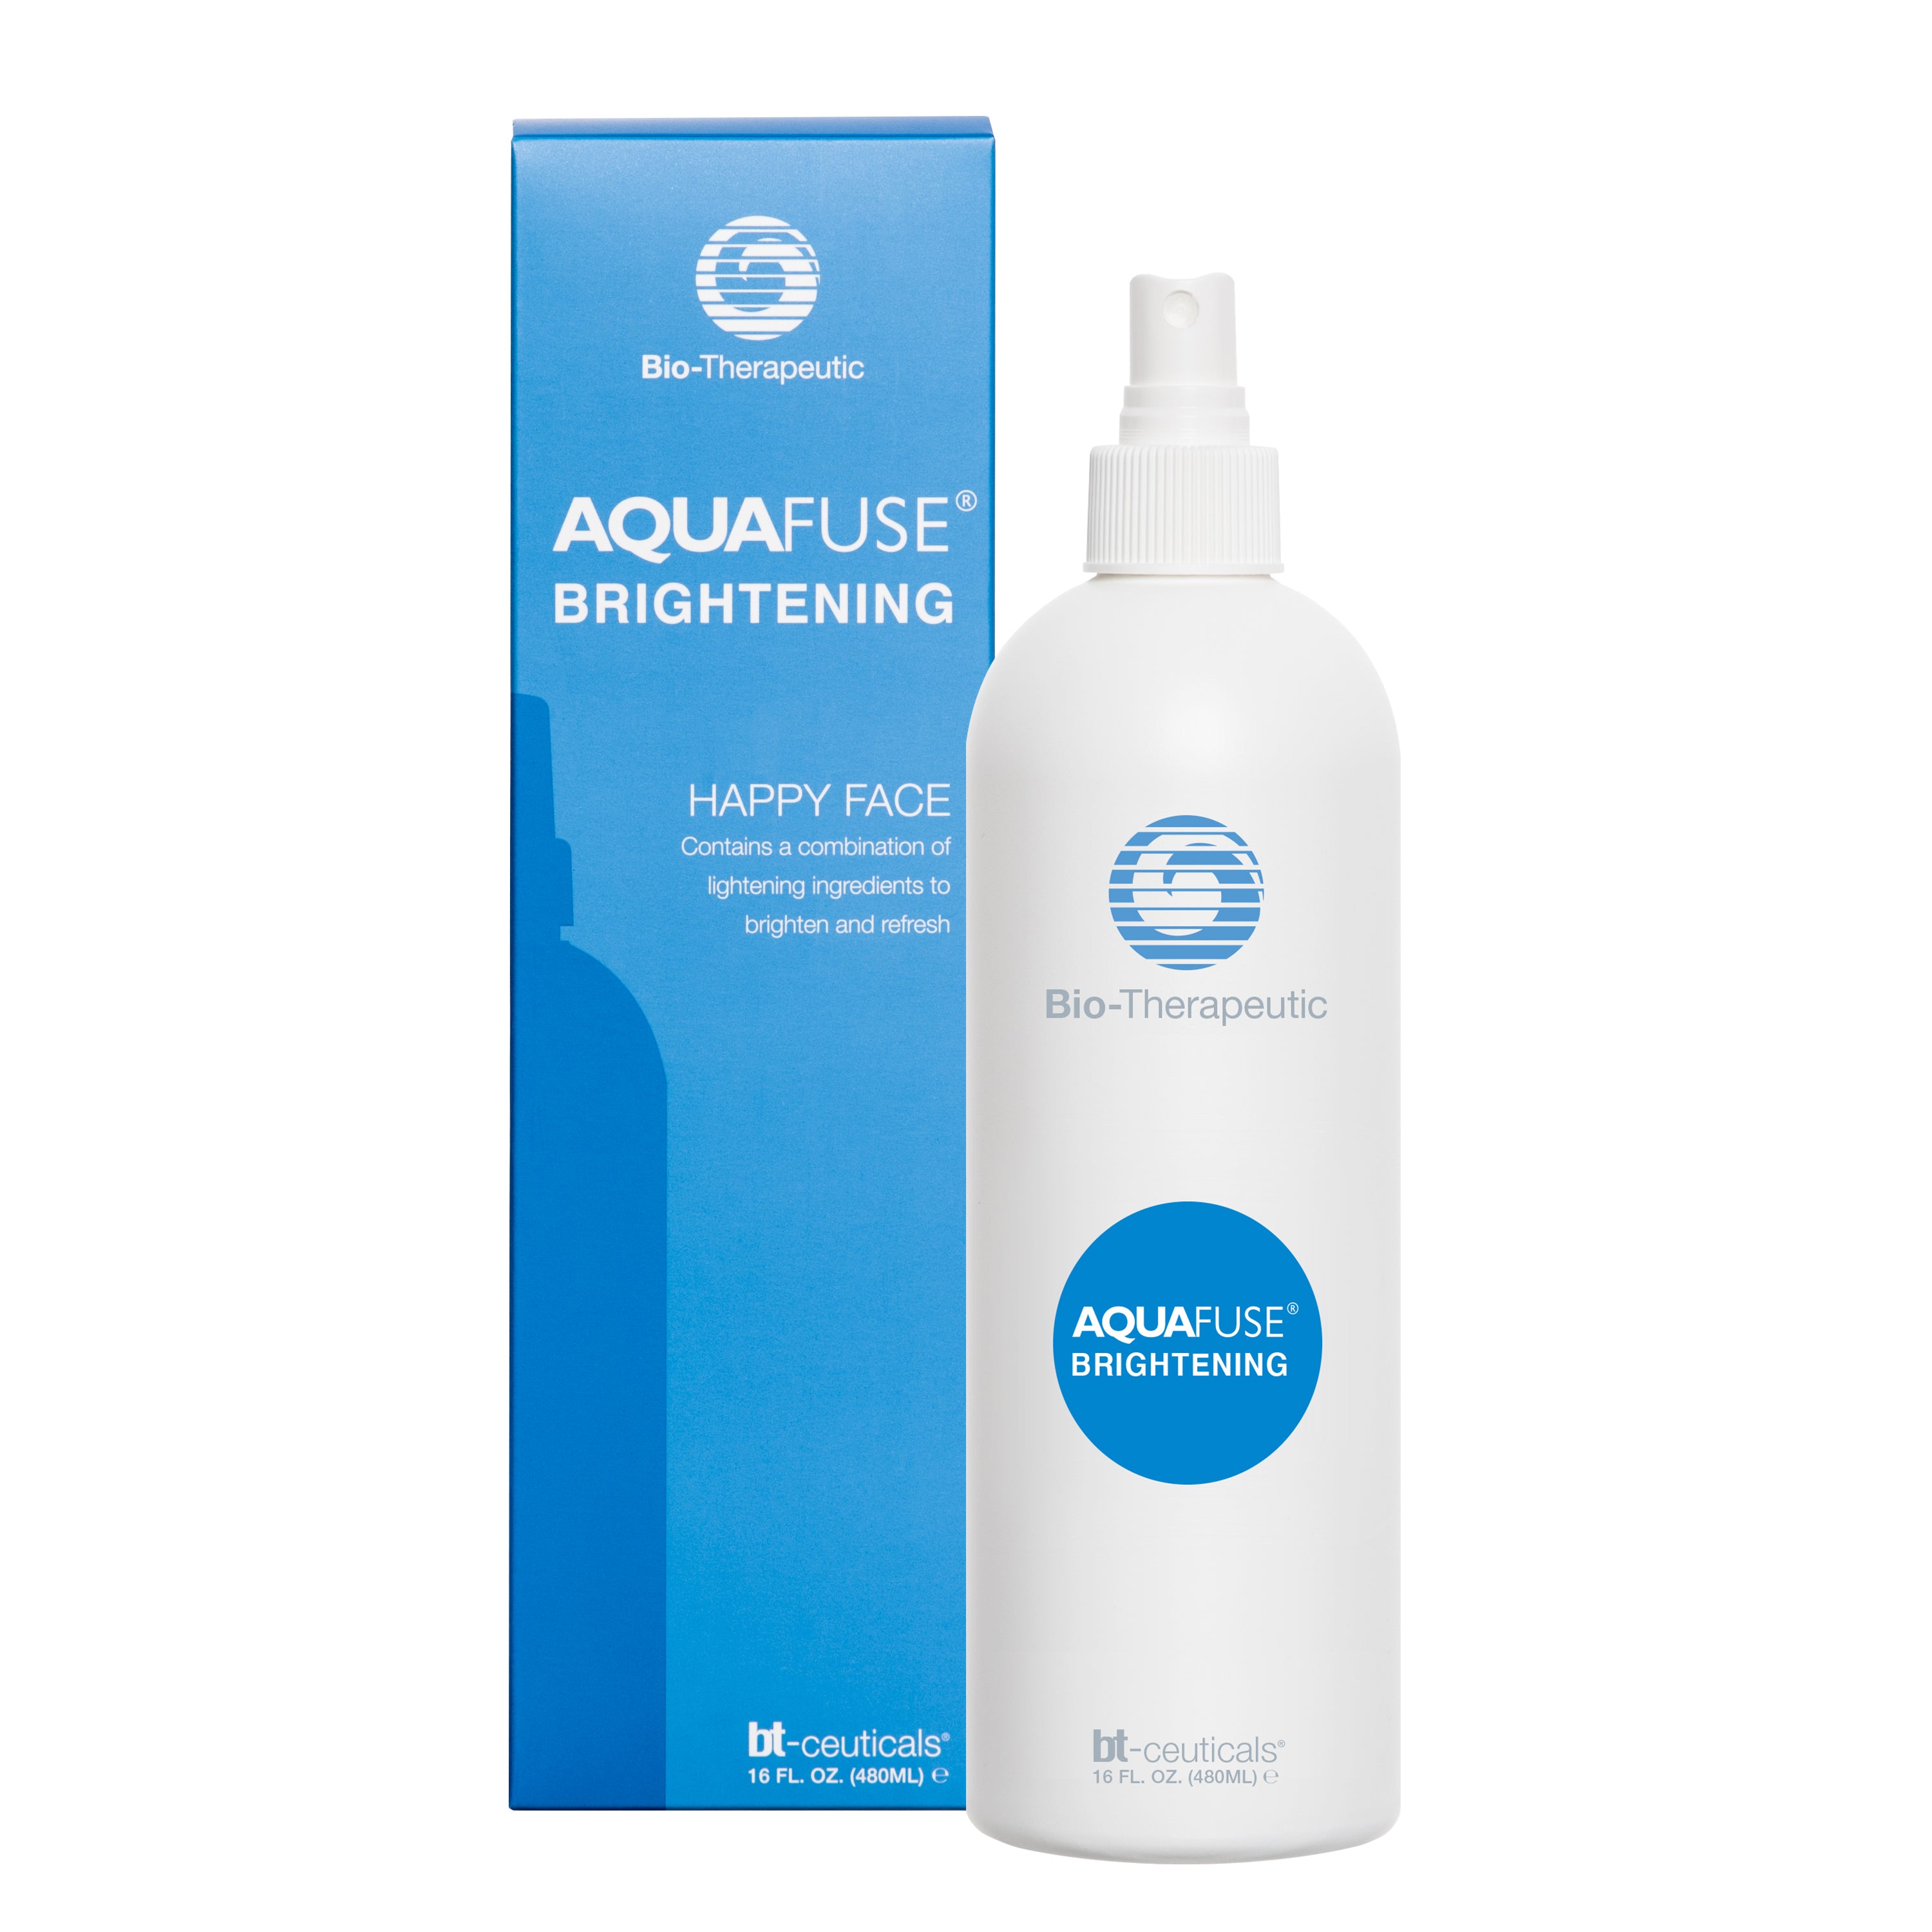 Aquafuse brightening 16oz